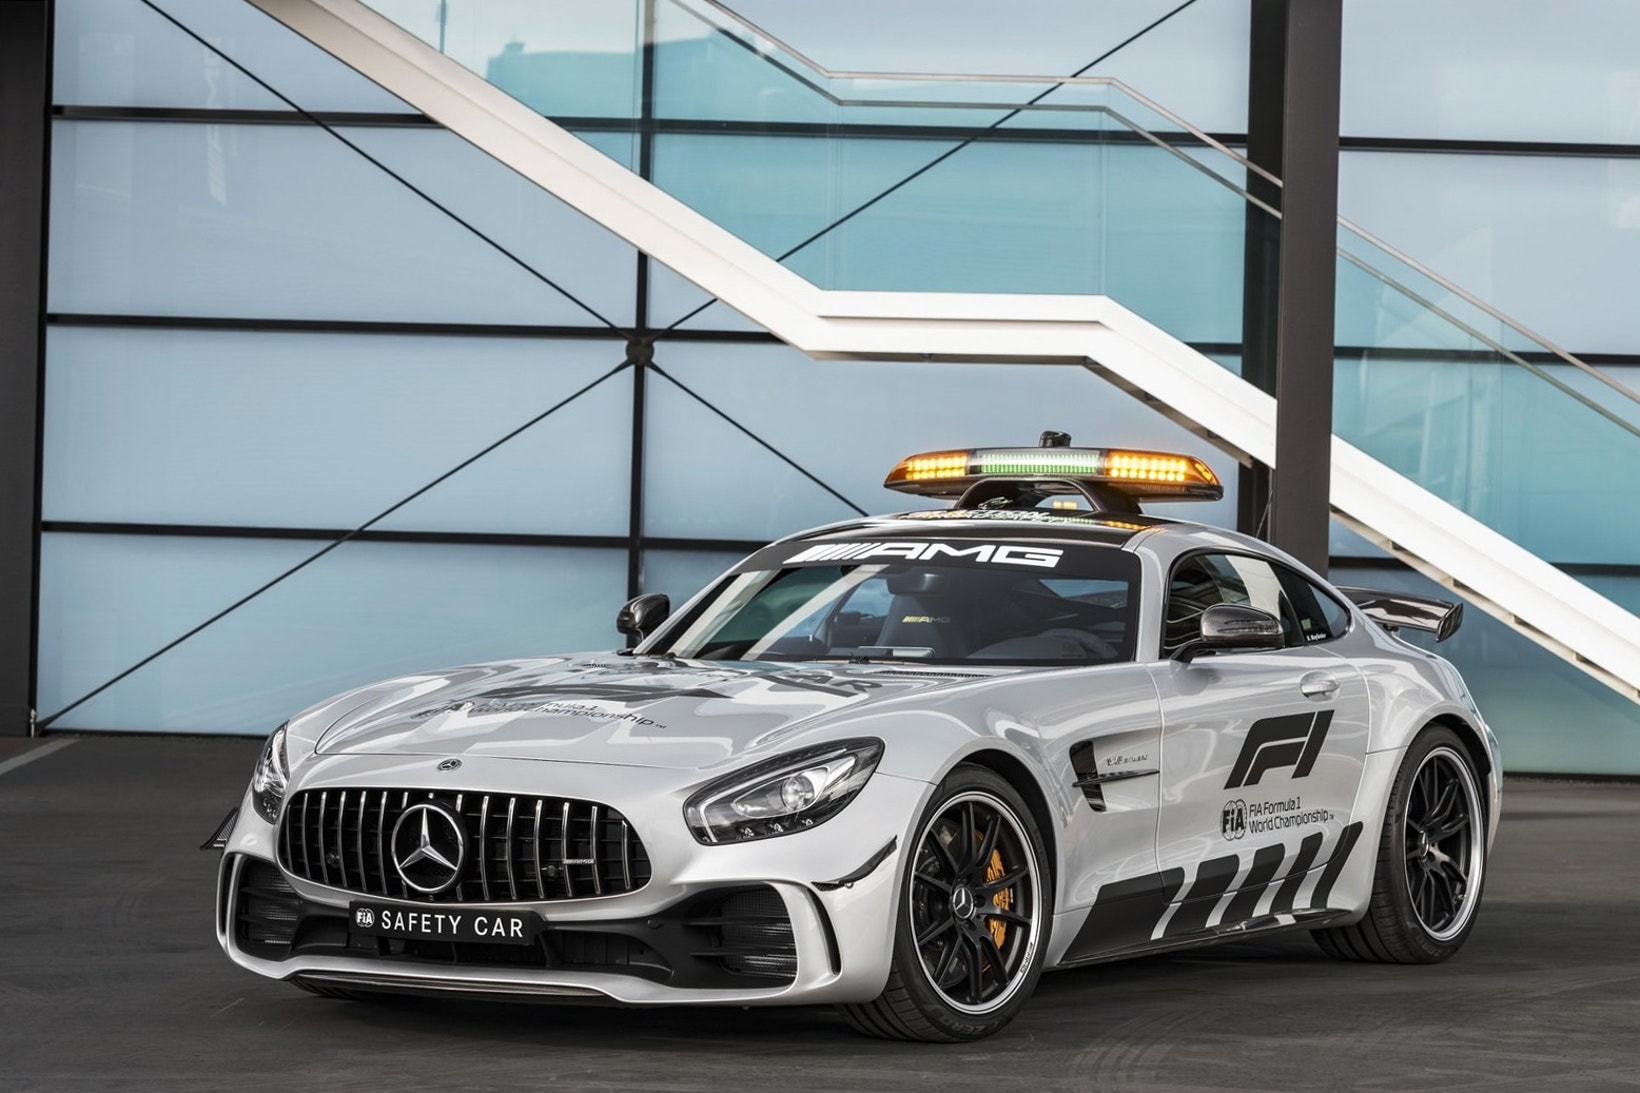 Mercedes-AMG 正式發佈「史上最強」F1 安全車